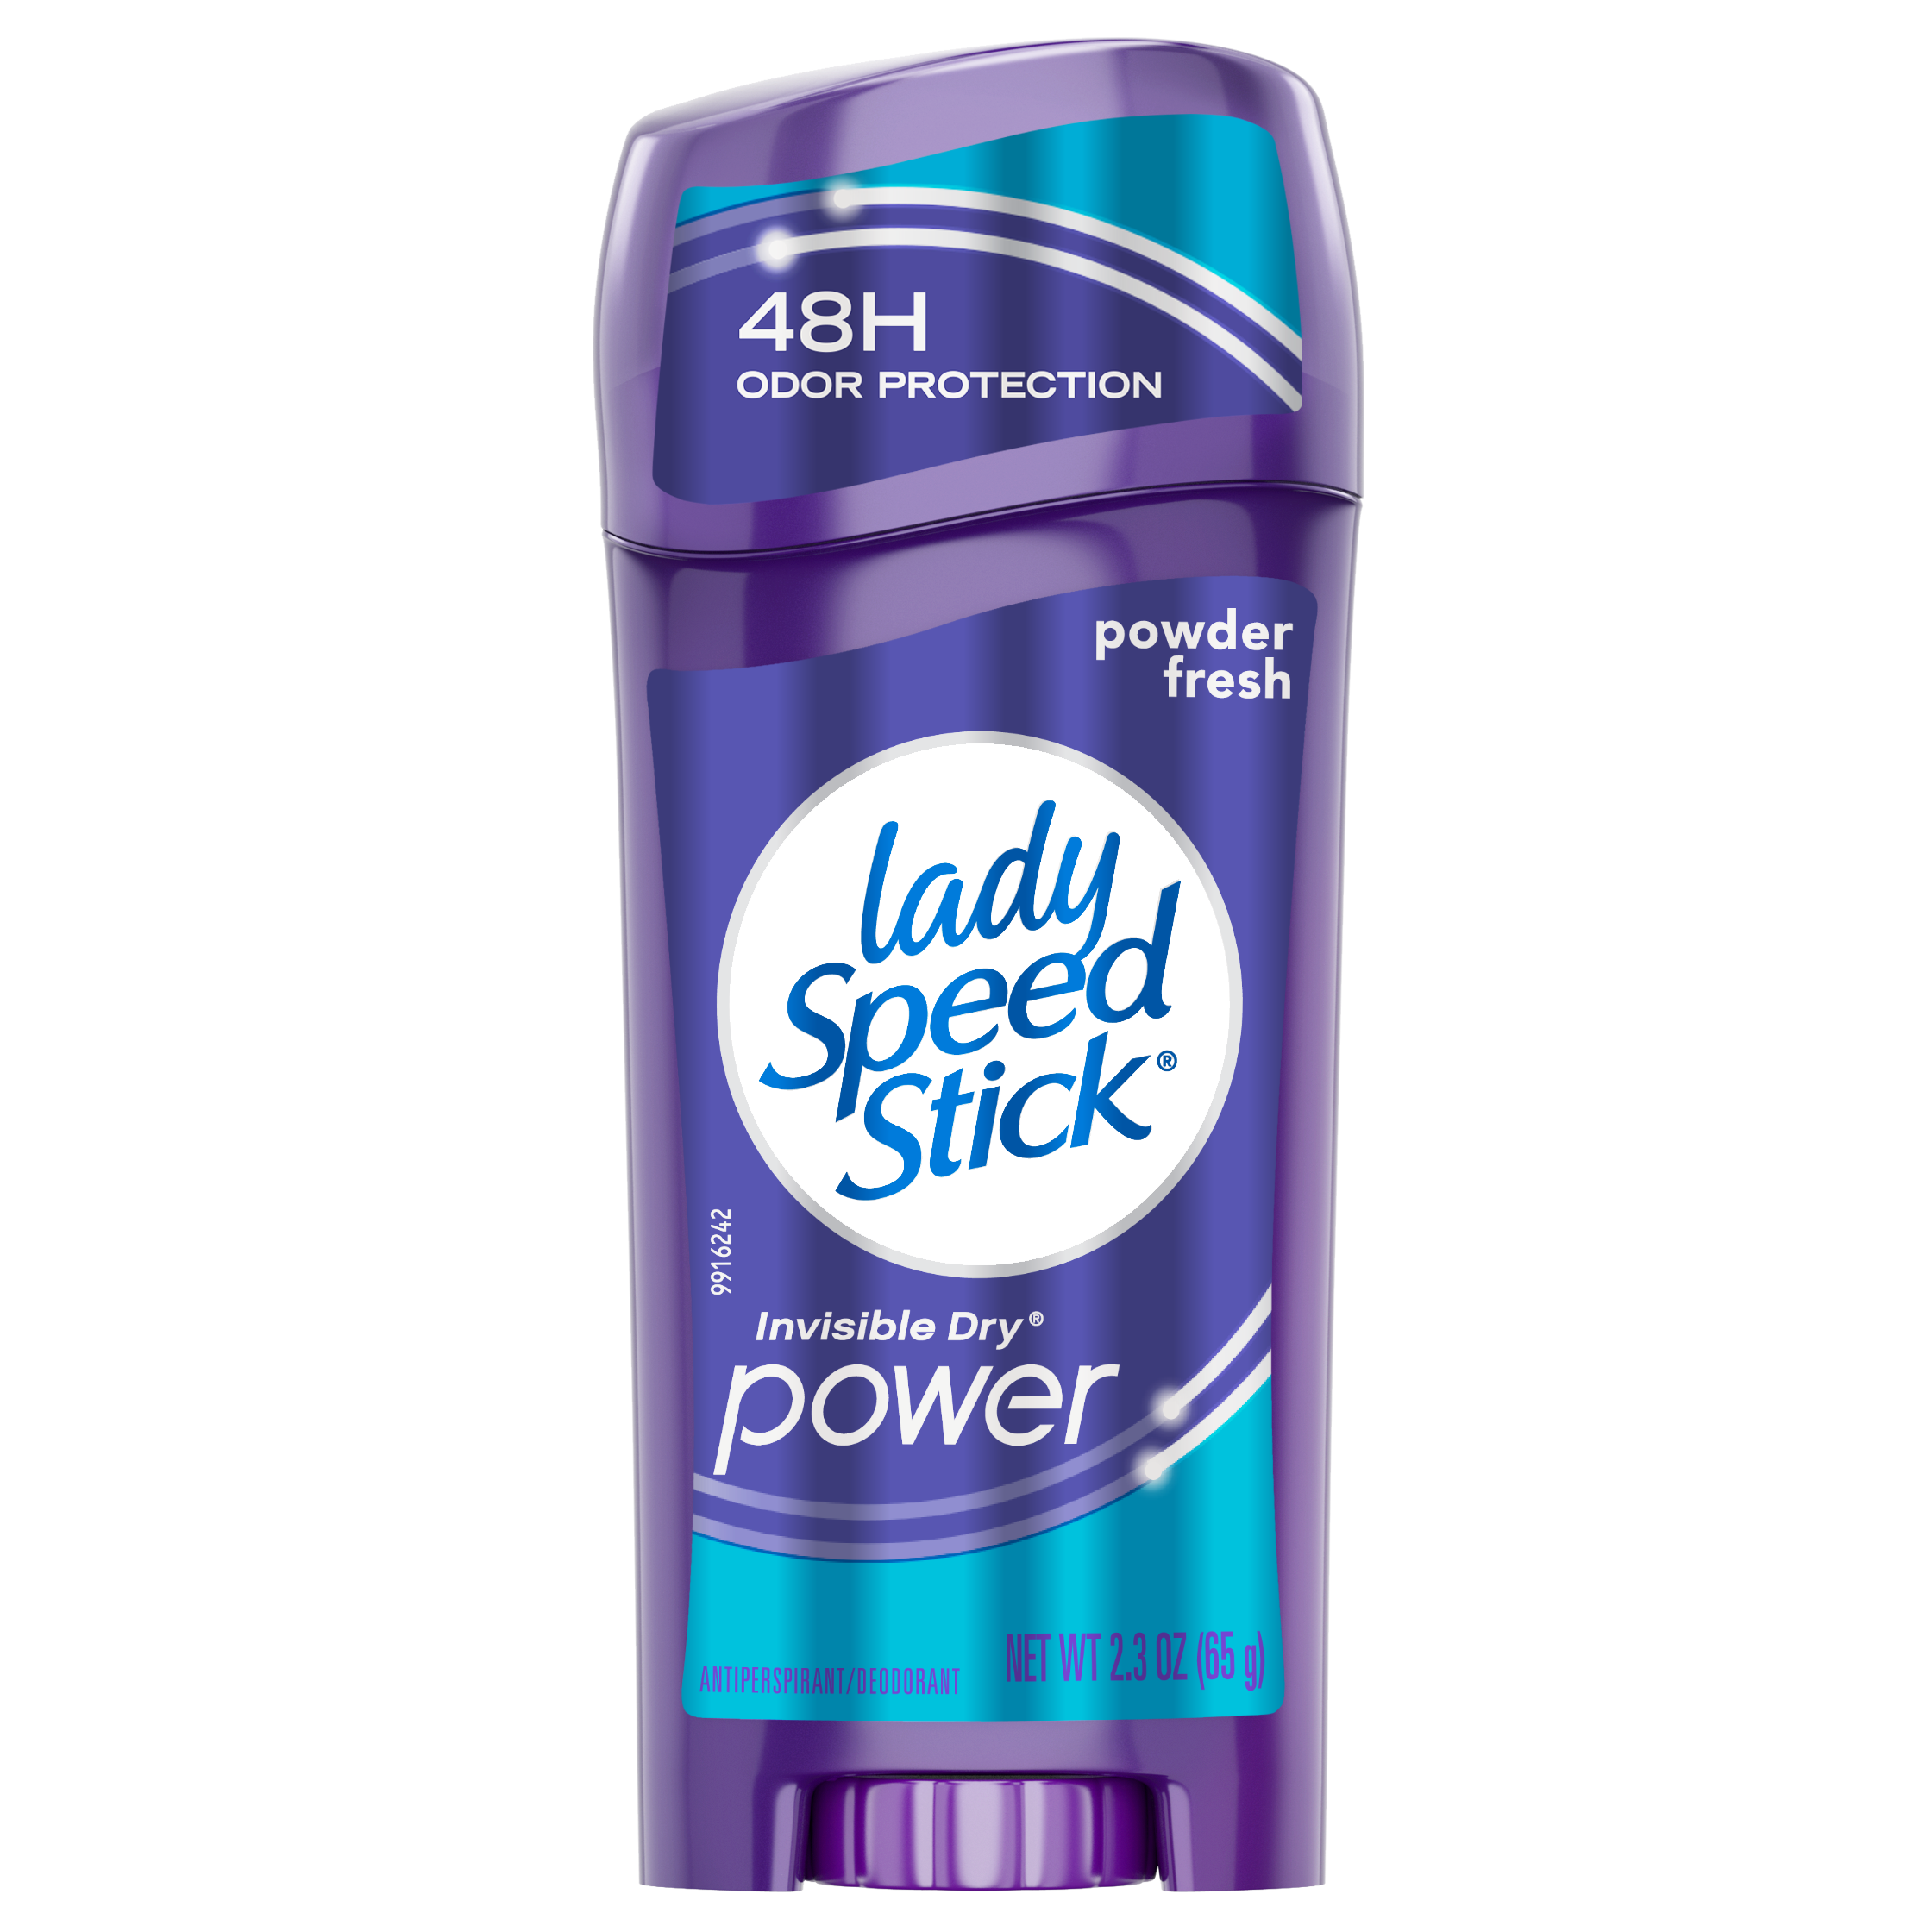 Lady Speed Stick, Invisible Dry Power Antiperspirant Female Deodorant, Powder Fresh, 2.3 oz - image 1 of 4